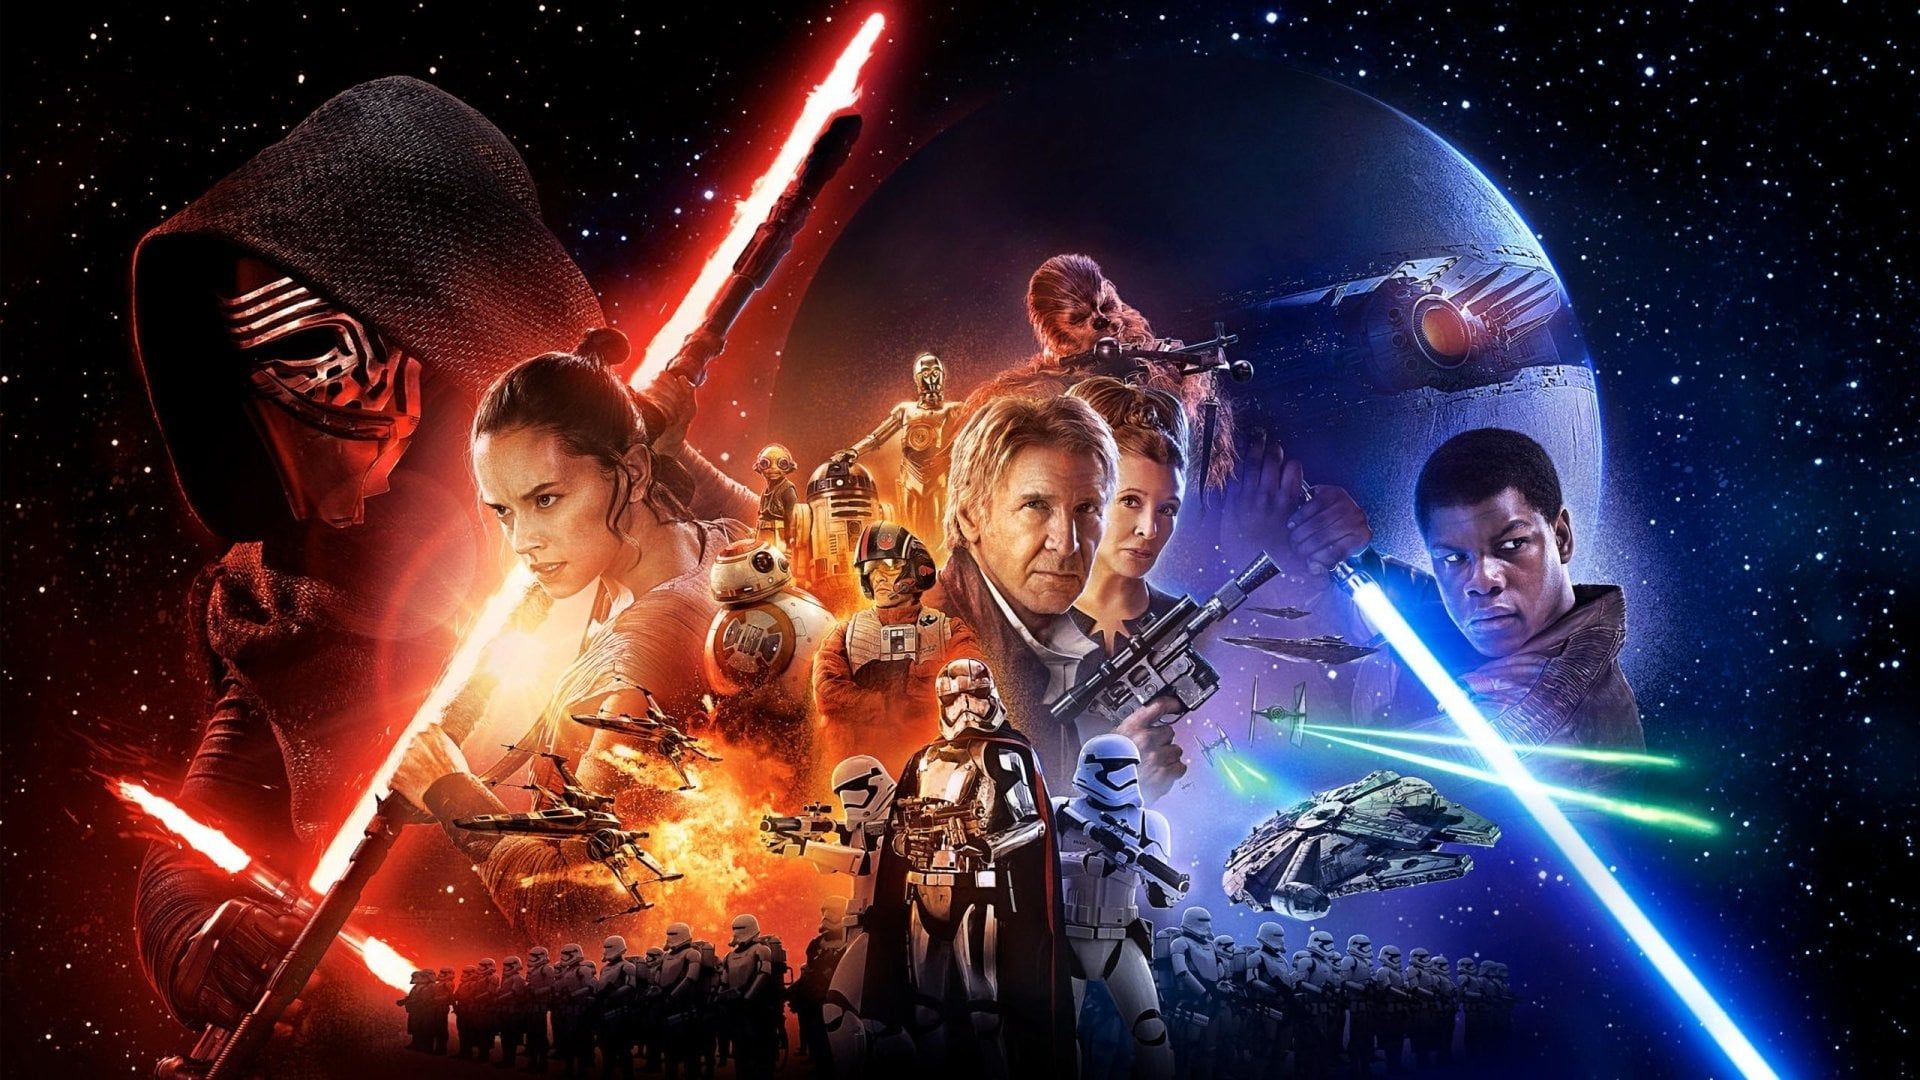 Star Wars: Episode VII - The Force Awakens Backdrop